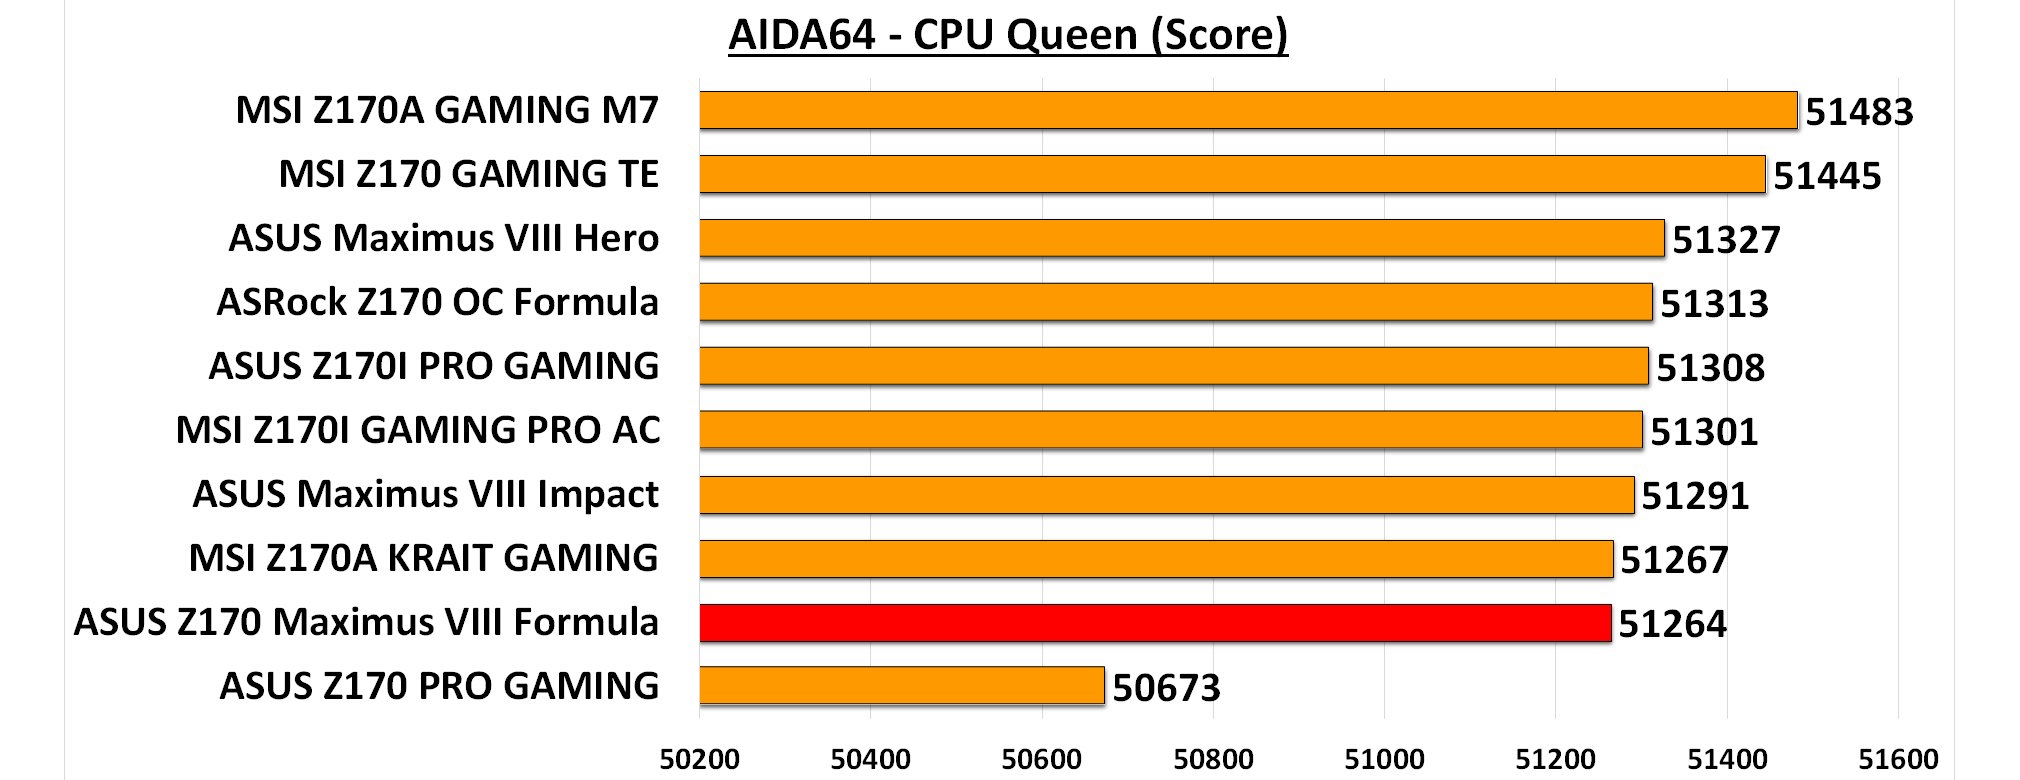 AIDA64 CPU Queen